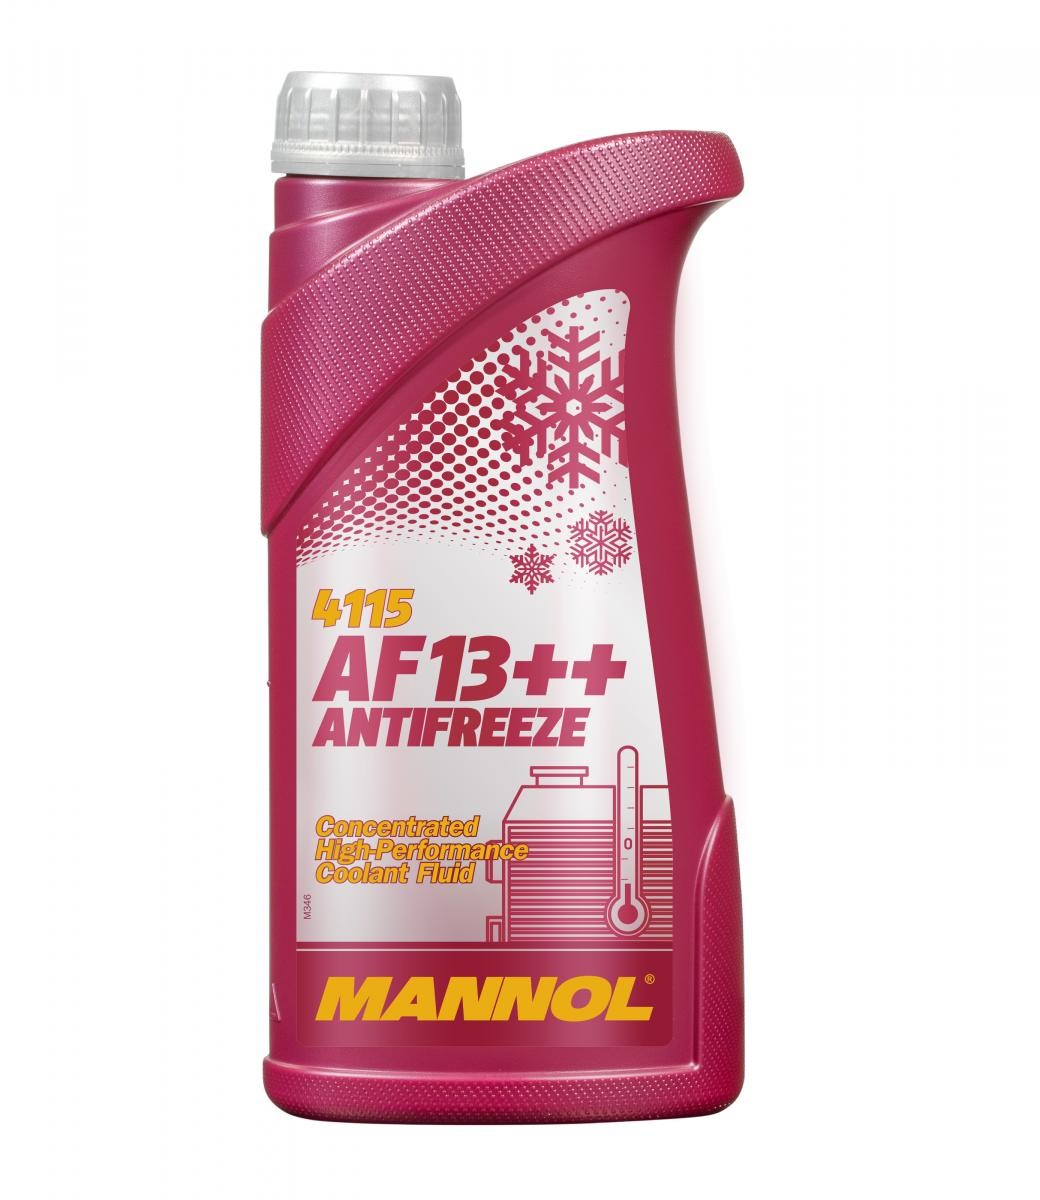 HERCULES LIMBO Kühlmittel G12 Rot, 1l, -38(50/50) MANNOL AF13++, High-performance MN4115-1